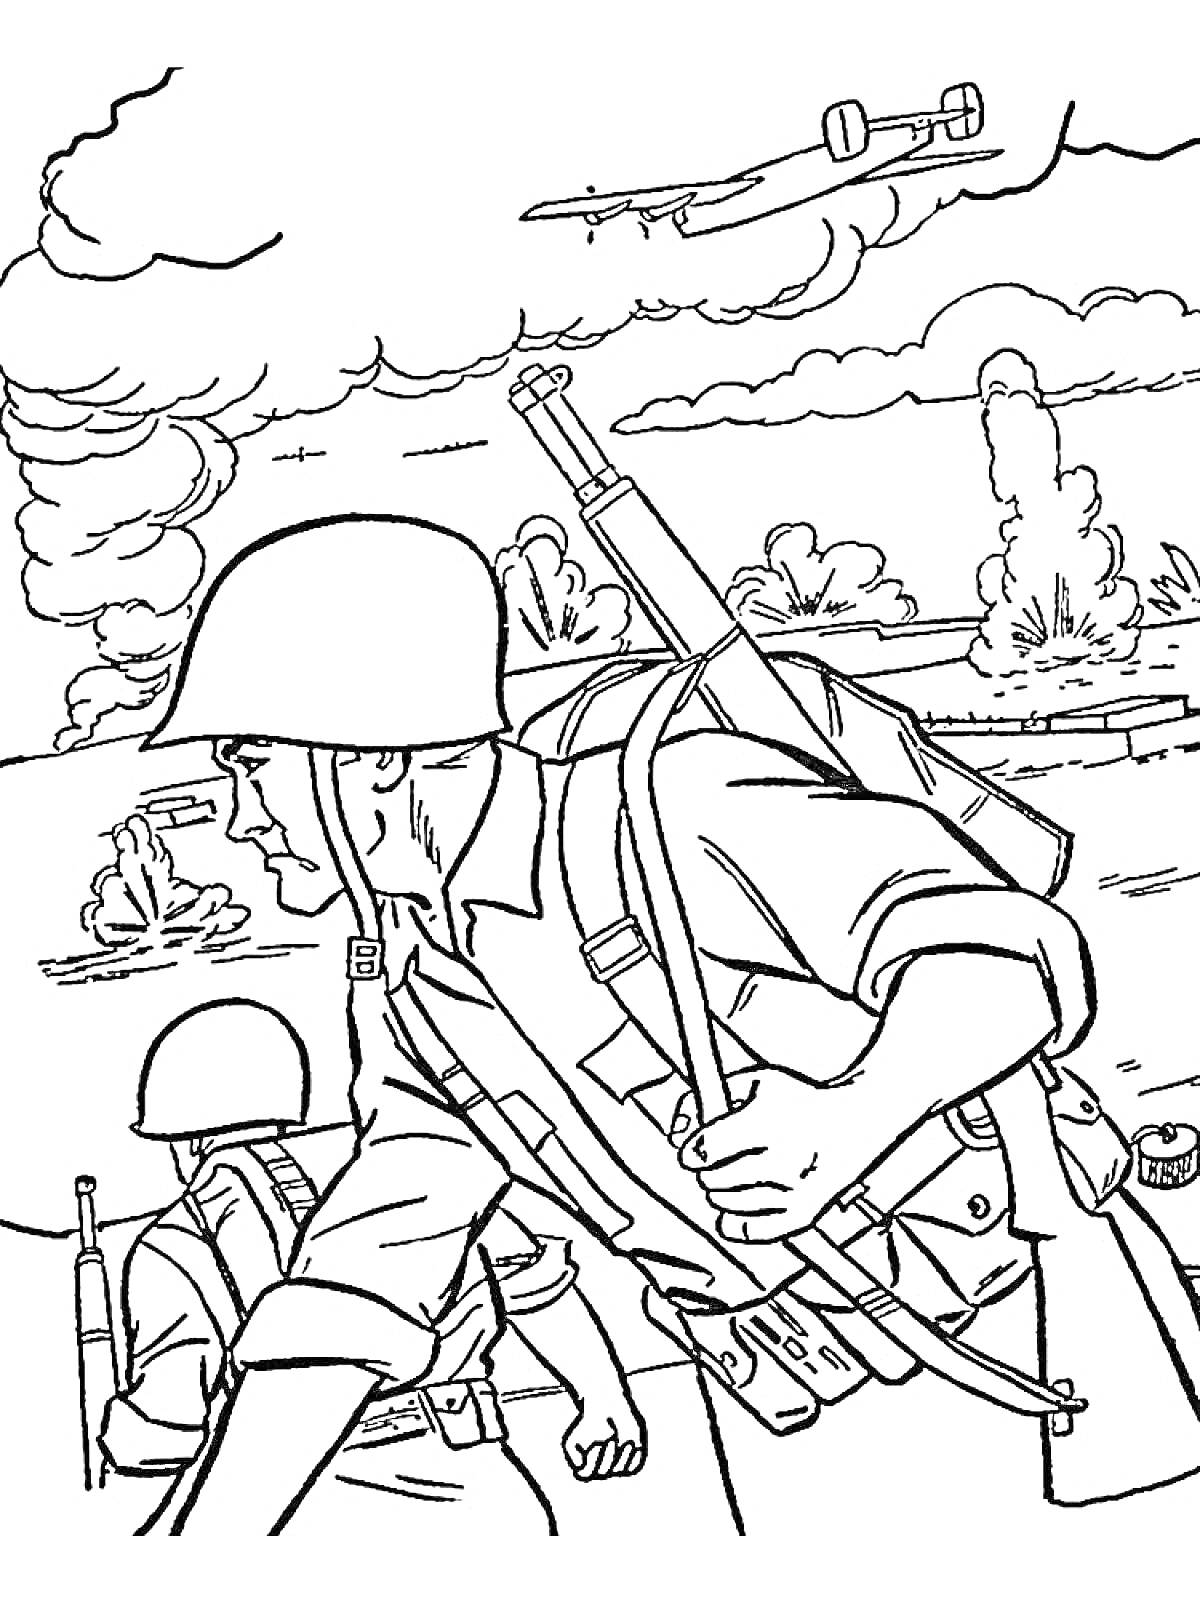 Раскраска Солдаты в бою: два солдата с винтовками и касками идут по полю, над ними летят два самолета, на заднем плане - взрывы и облака